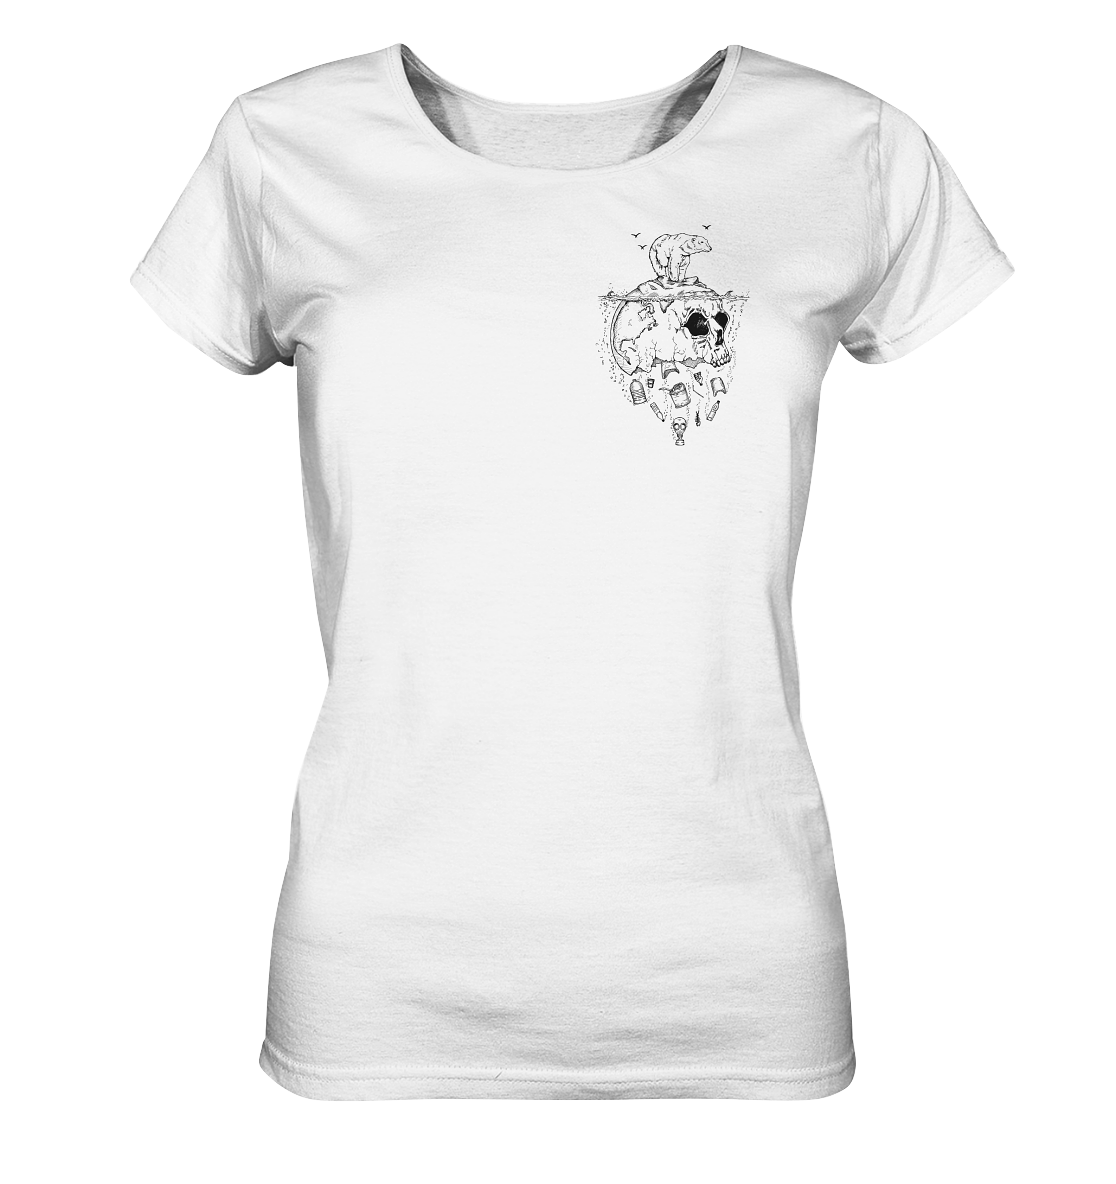 front-ladies-organic-shirt-f8f8f8-1116x-20.png